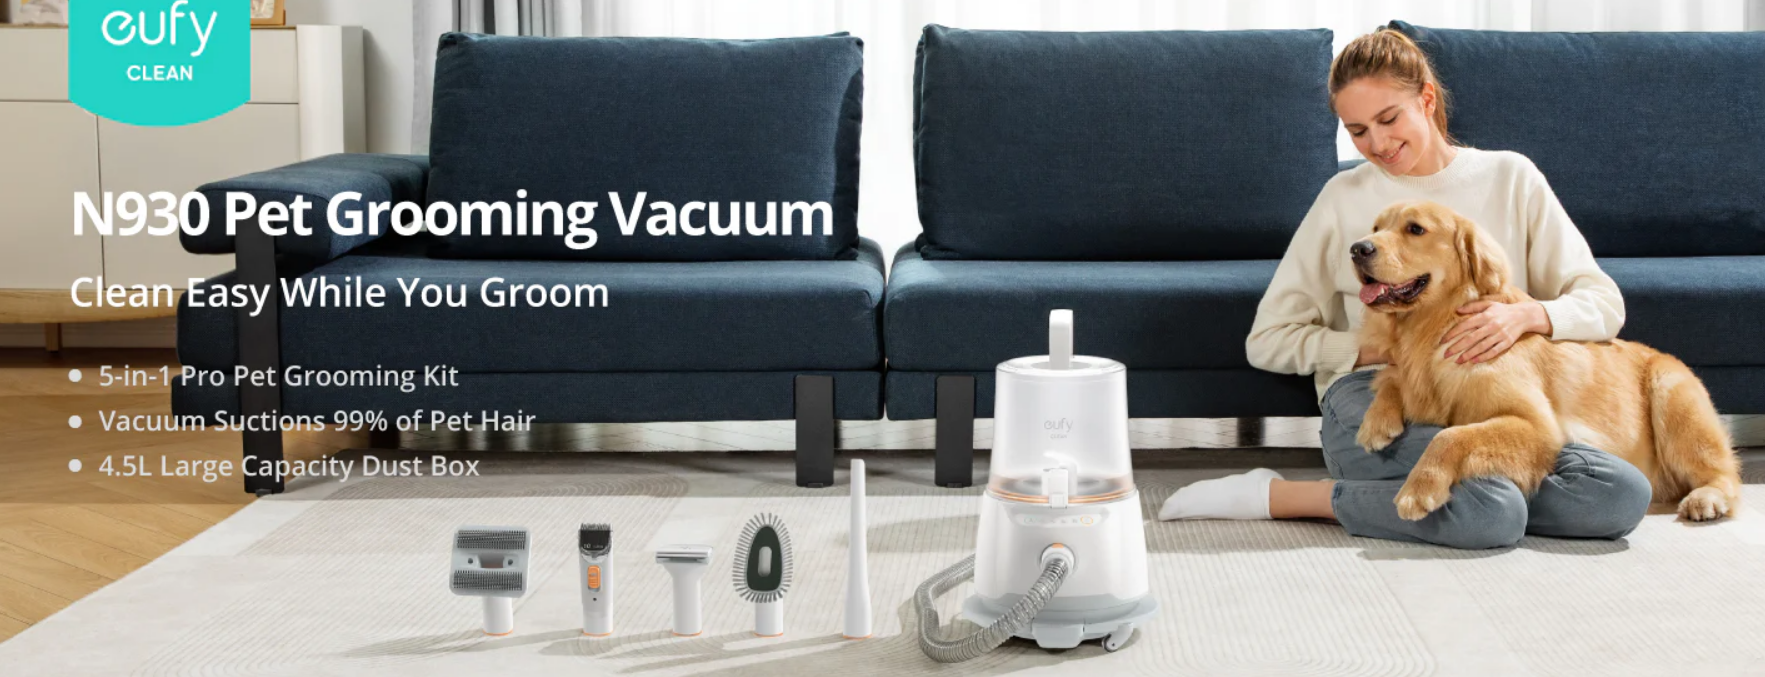 Pet grooming kit with vacuum